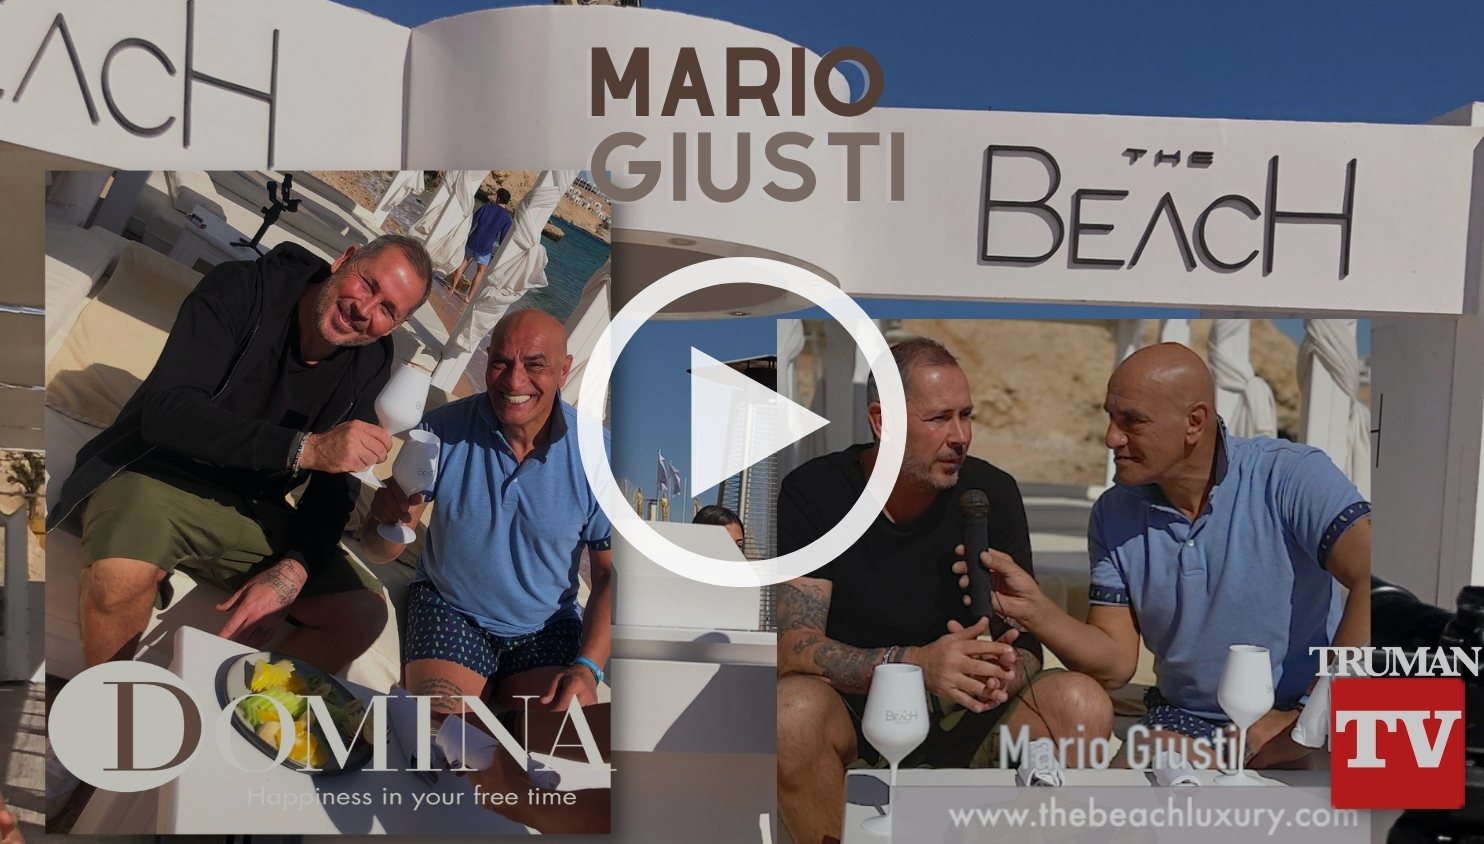 Intervista a Mario Giusti Manager The Beach Luxury Club al Domina Coral Bay in Sharm El Sheikh